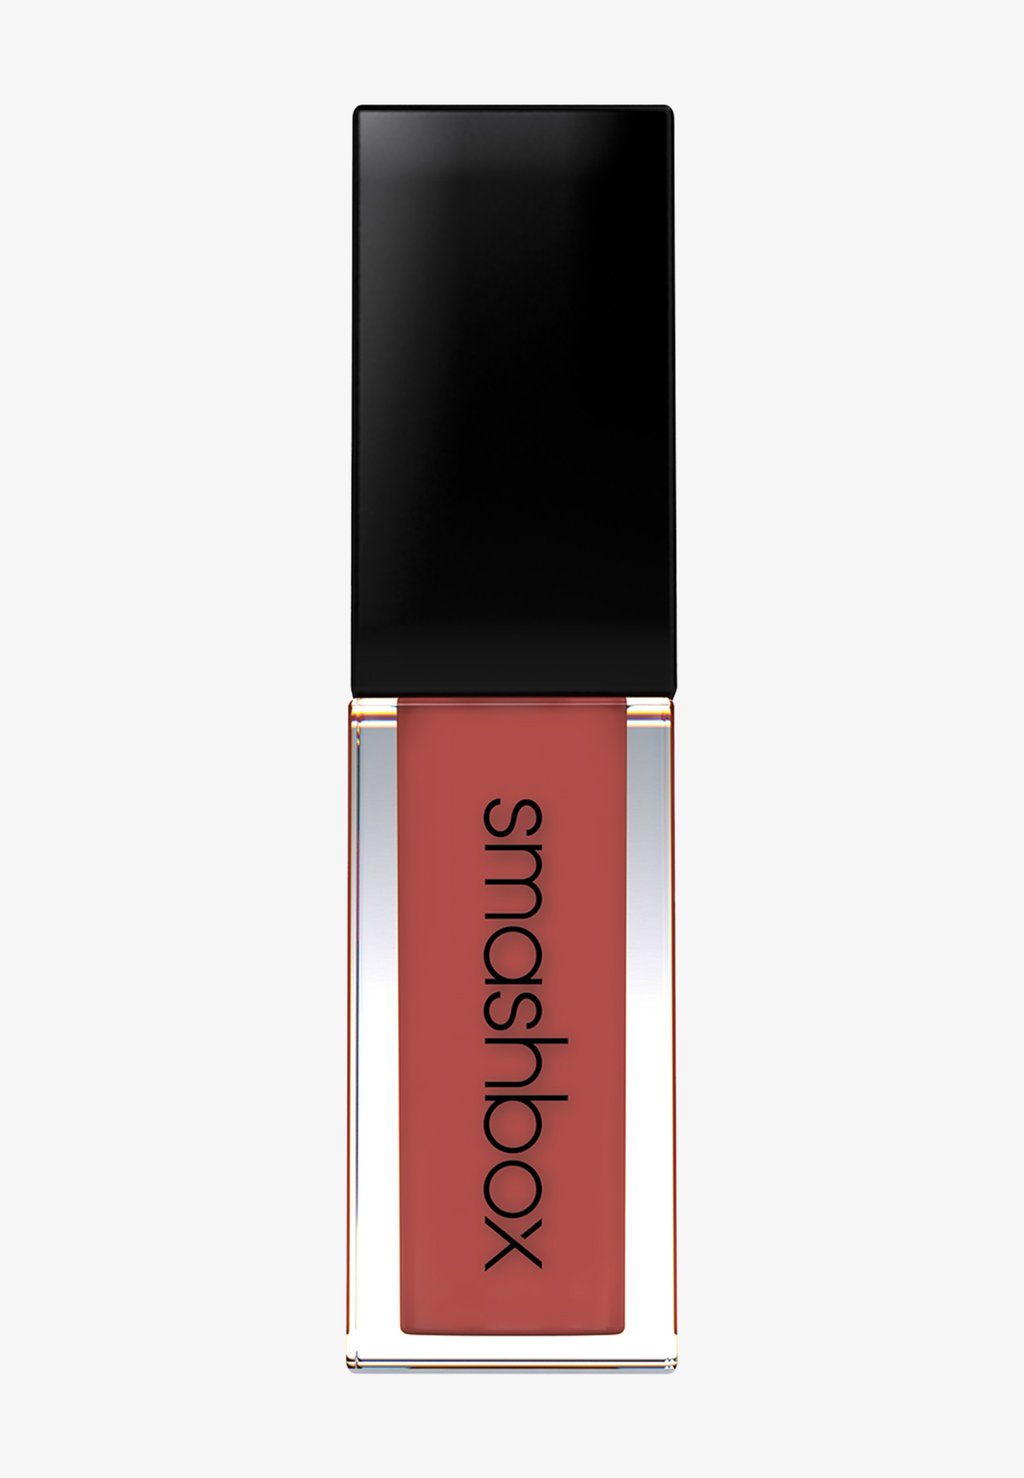 Жидкая помада ALWAYS ON LIQUID LIPSTICK Smashbox, цвет driver's seat smashbox always on liquid lipstick limited edition